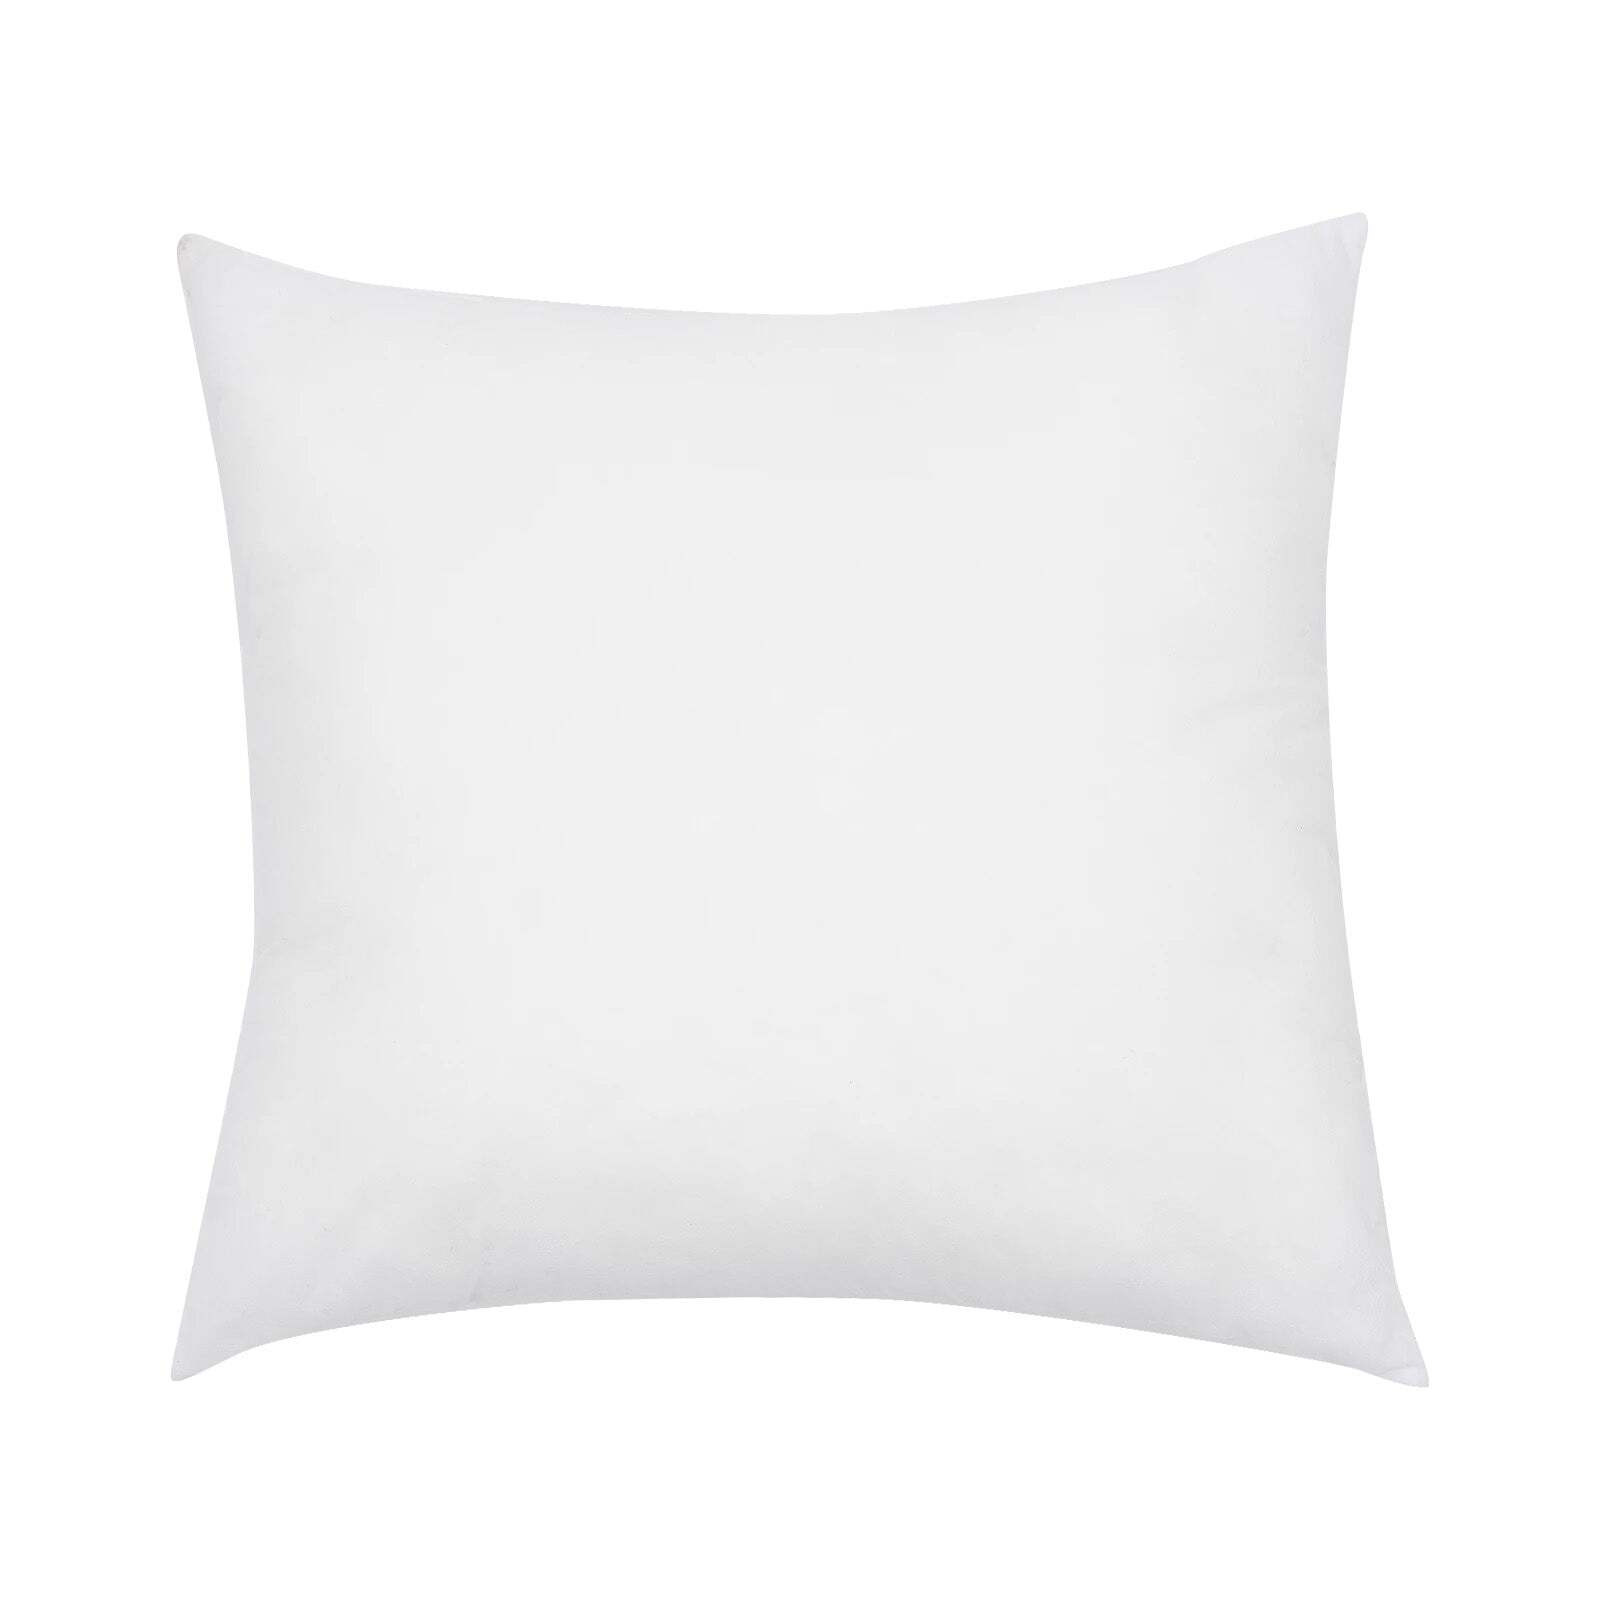 Medium Square Cushion Pad, White, 45x45 cm